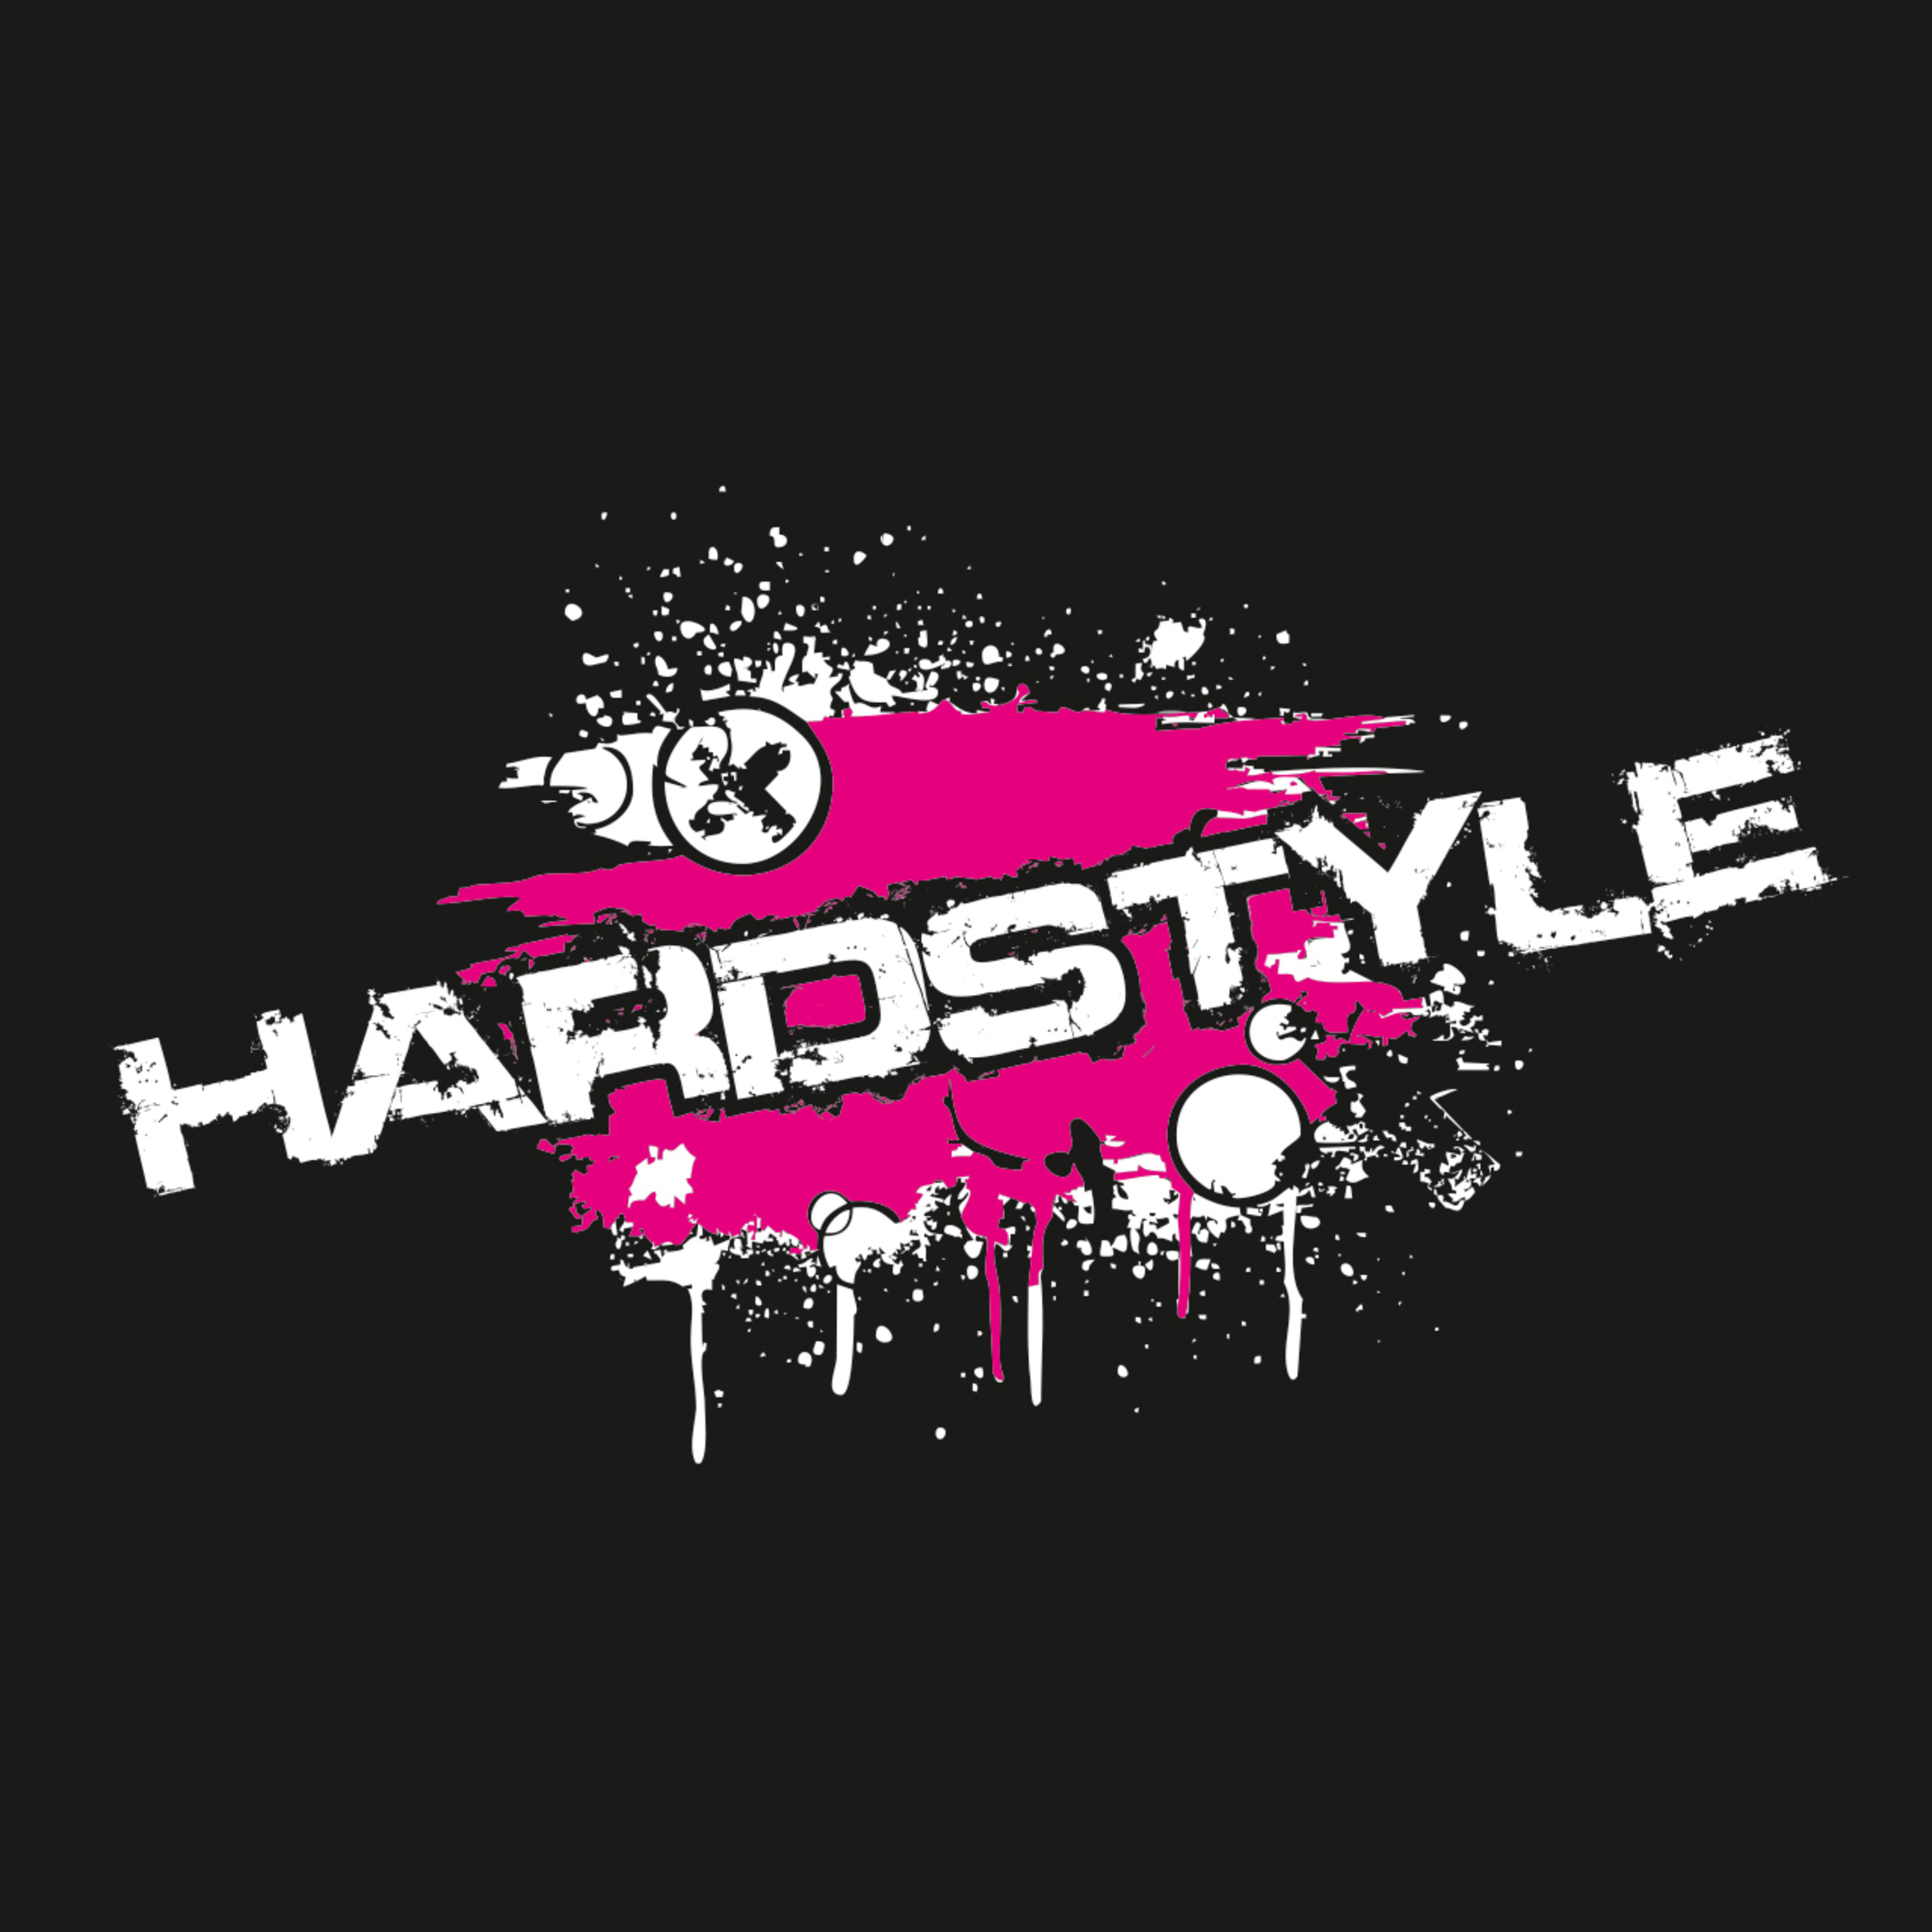 06-02-2021 Live Stream #HardStyle